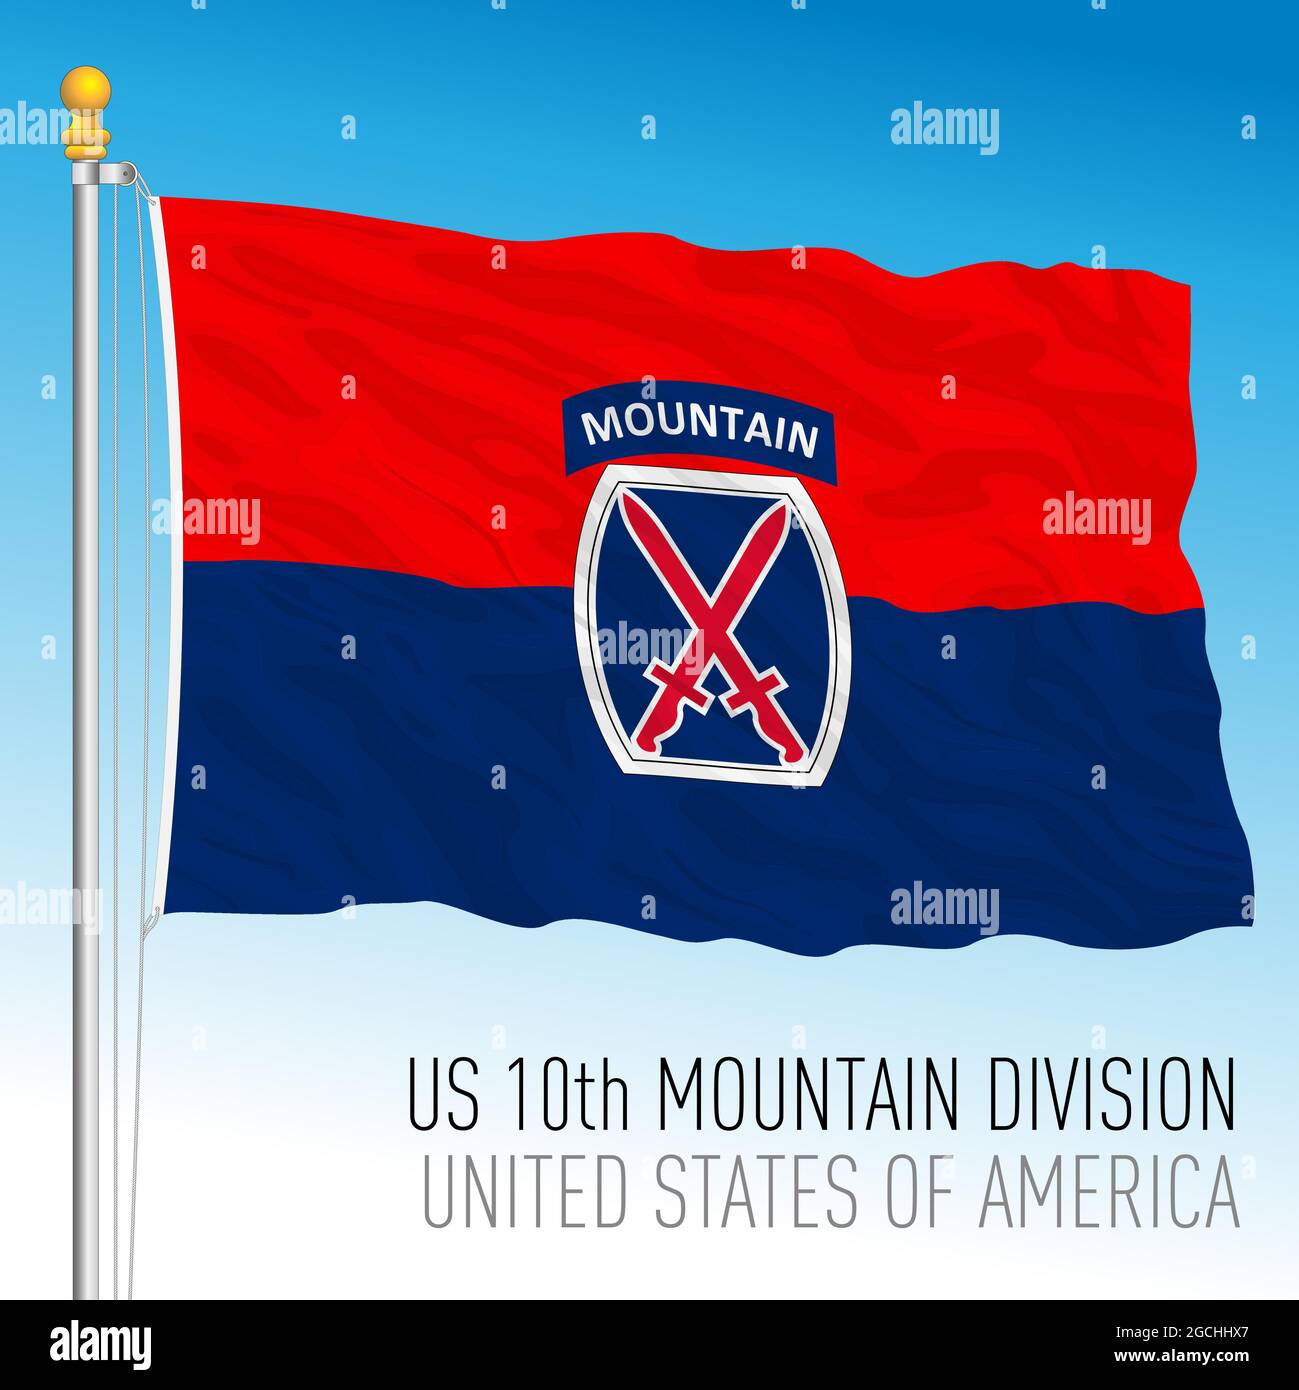 US 10th Mountain Division Flagge, Vereinigte Staaten von Amerika, Vektorgrafik Stock Vektor